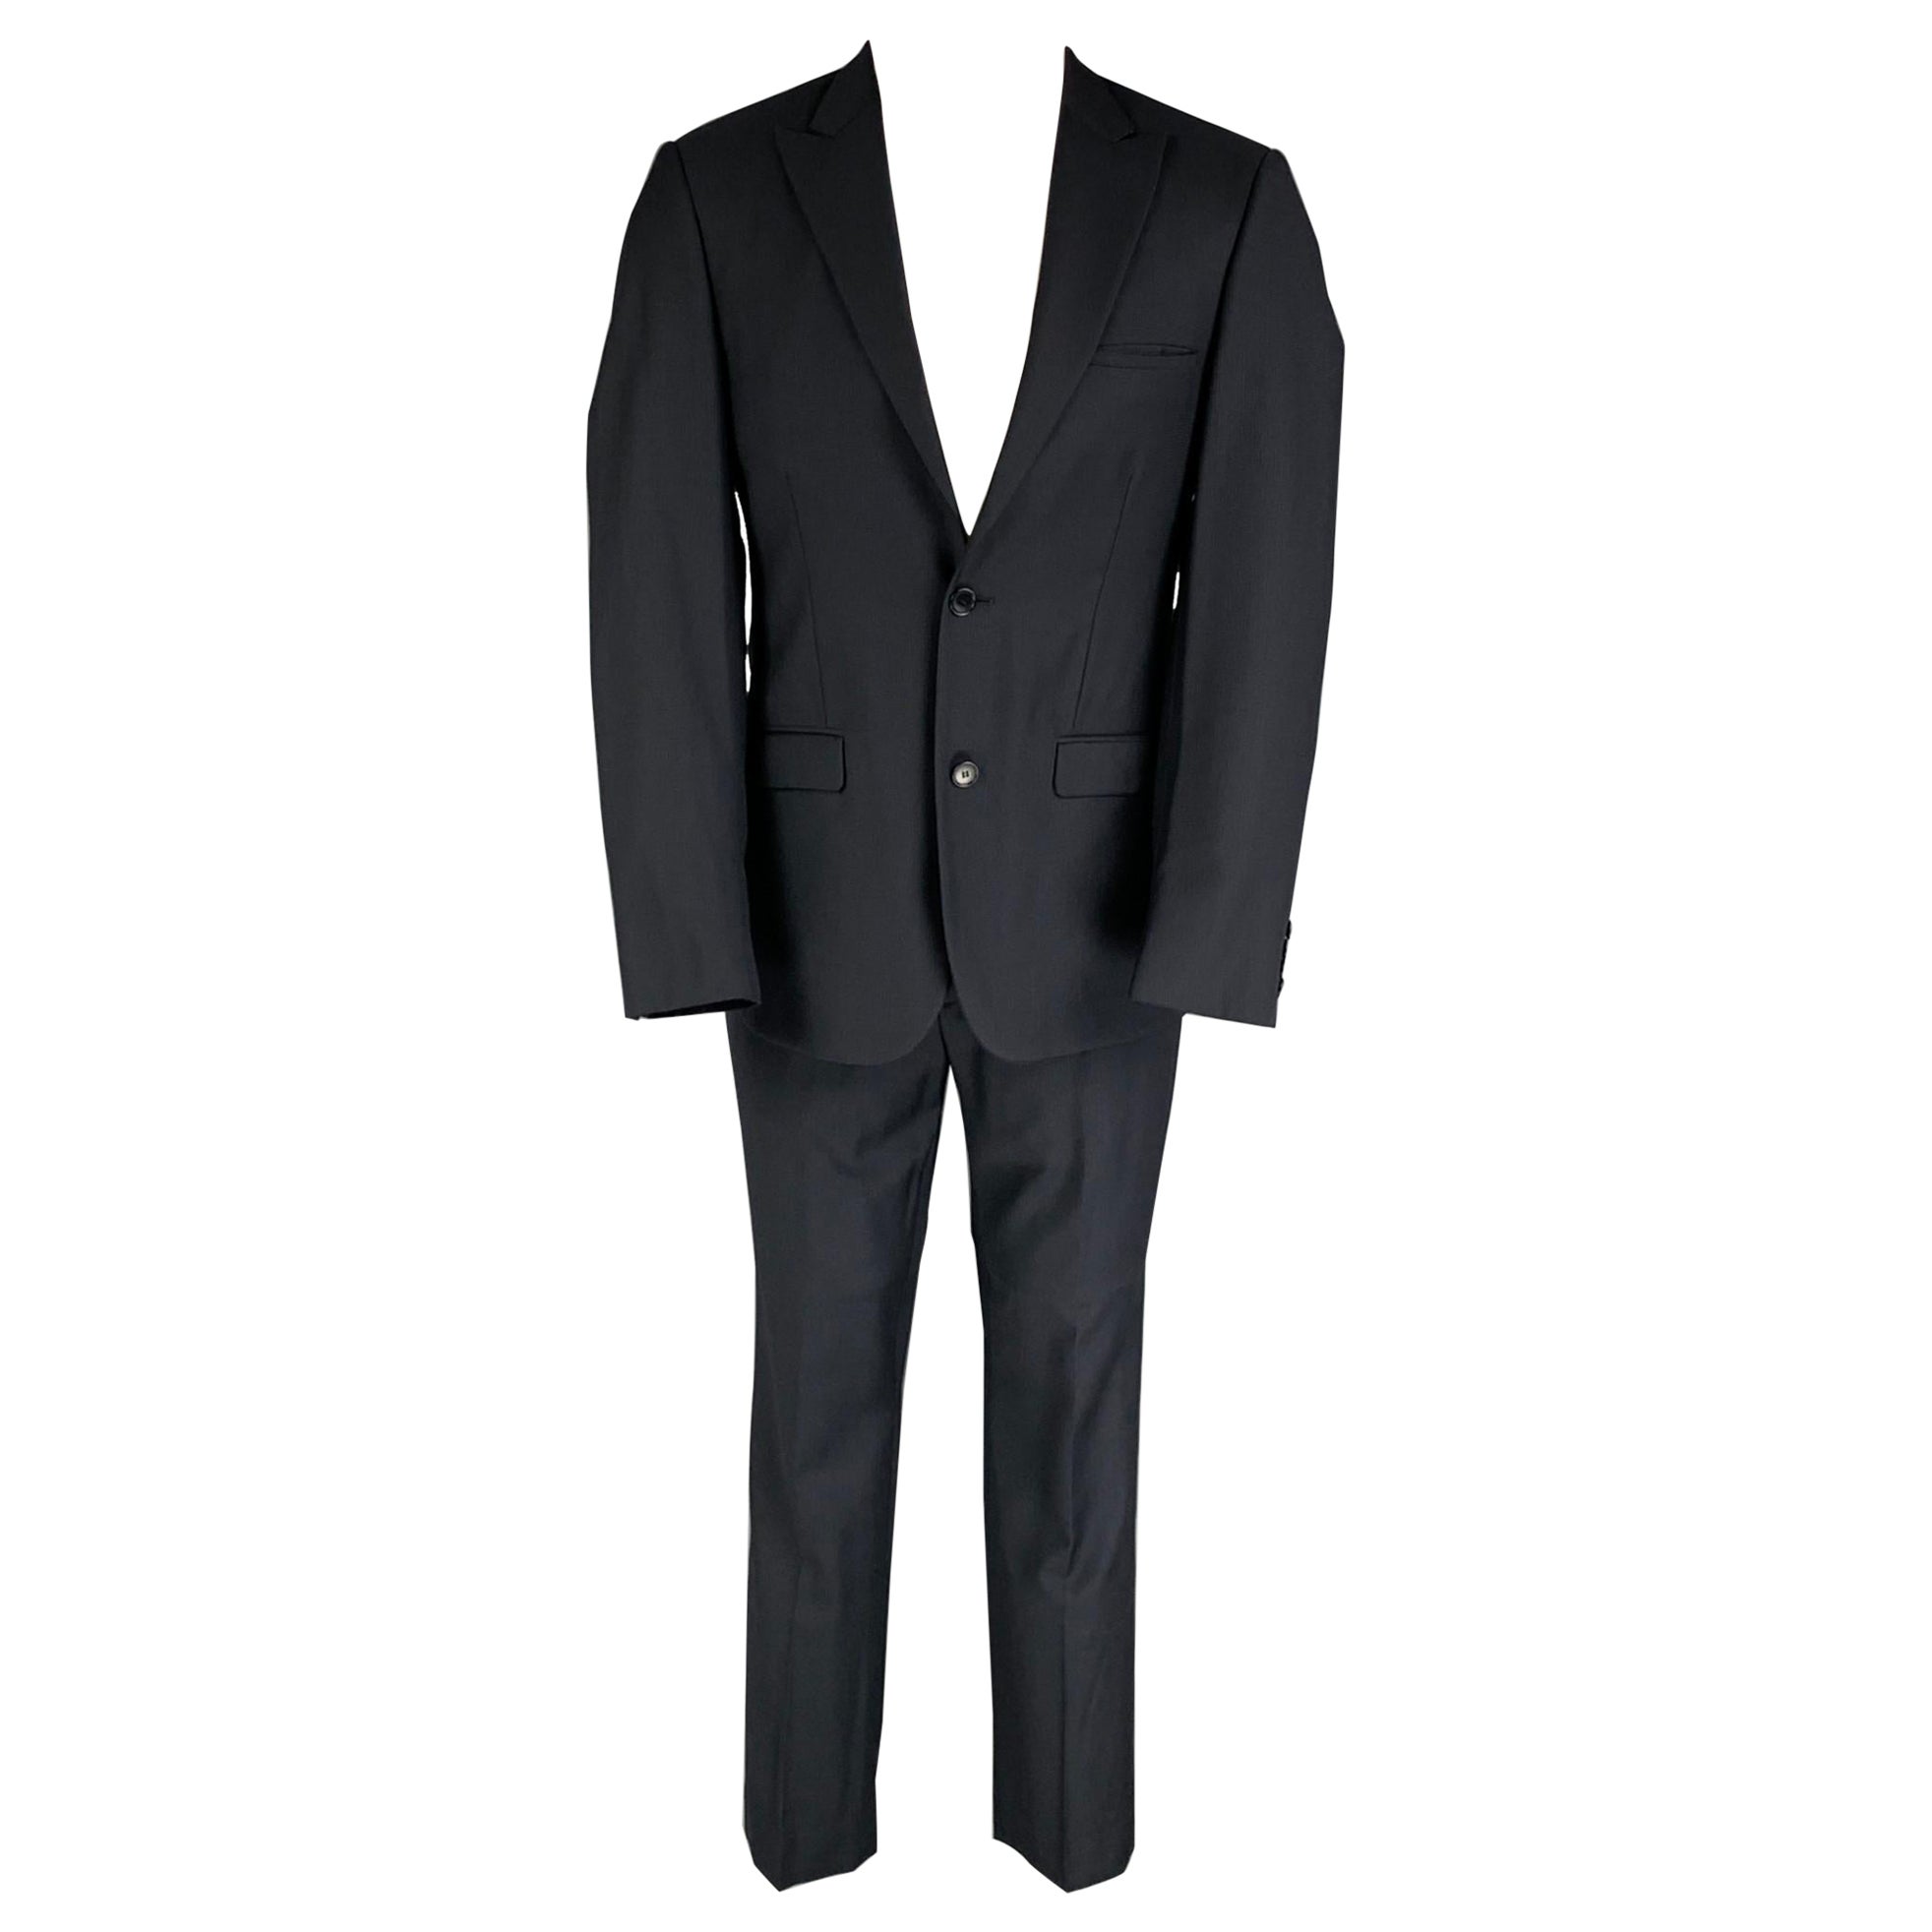 CALVIN KLEIN COLLECTION Size 36 Navy Grid Wool Peak Lapel Suit